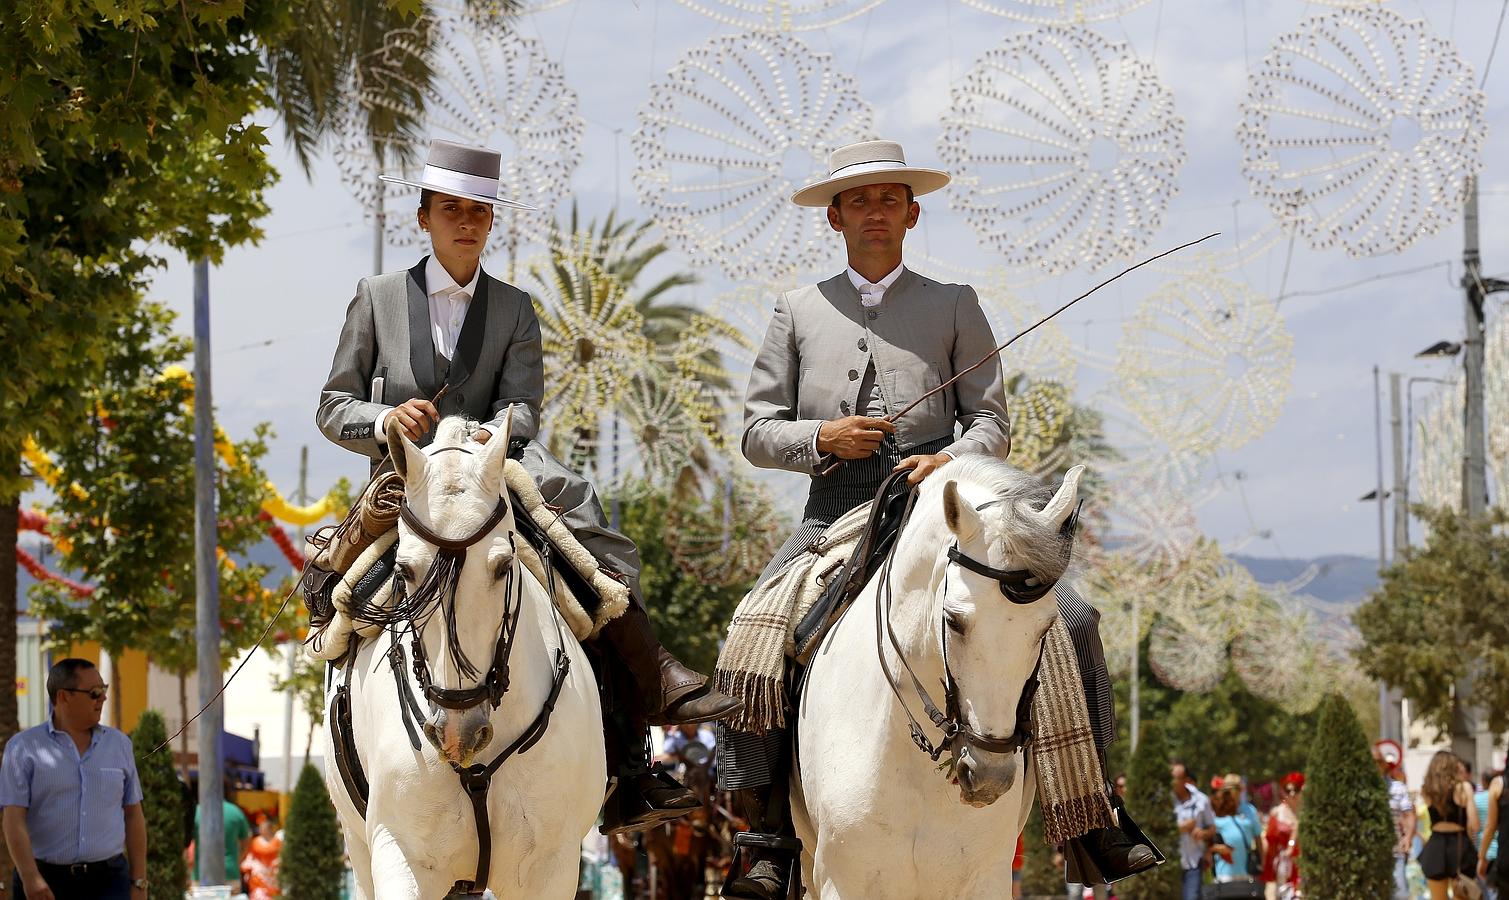 La Feria de Córdoba desde la grupa de un caballo